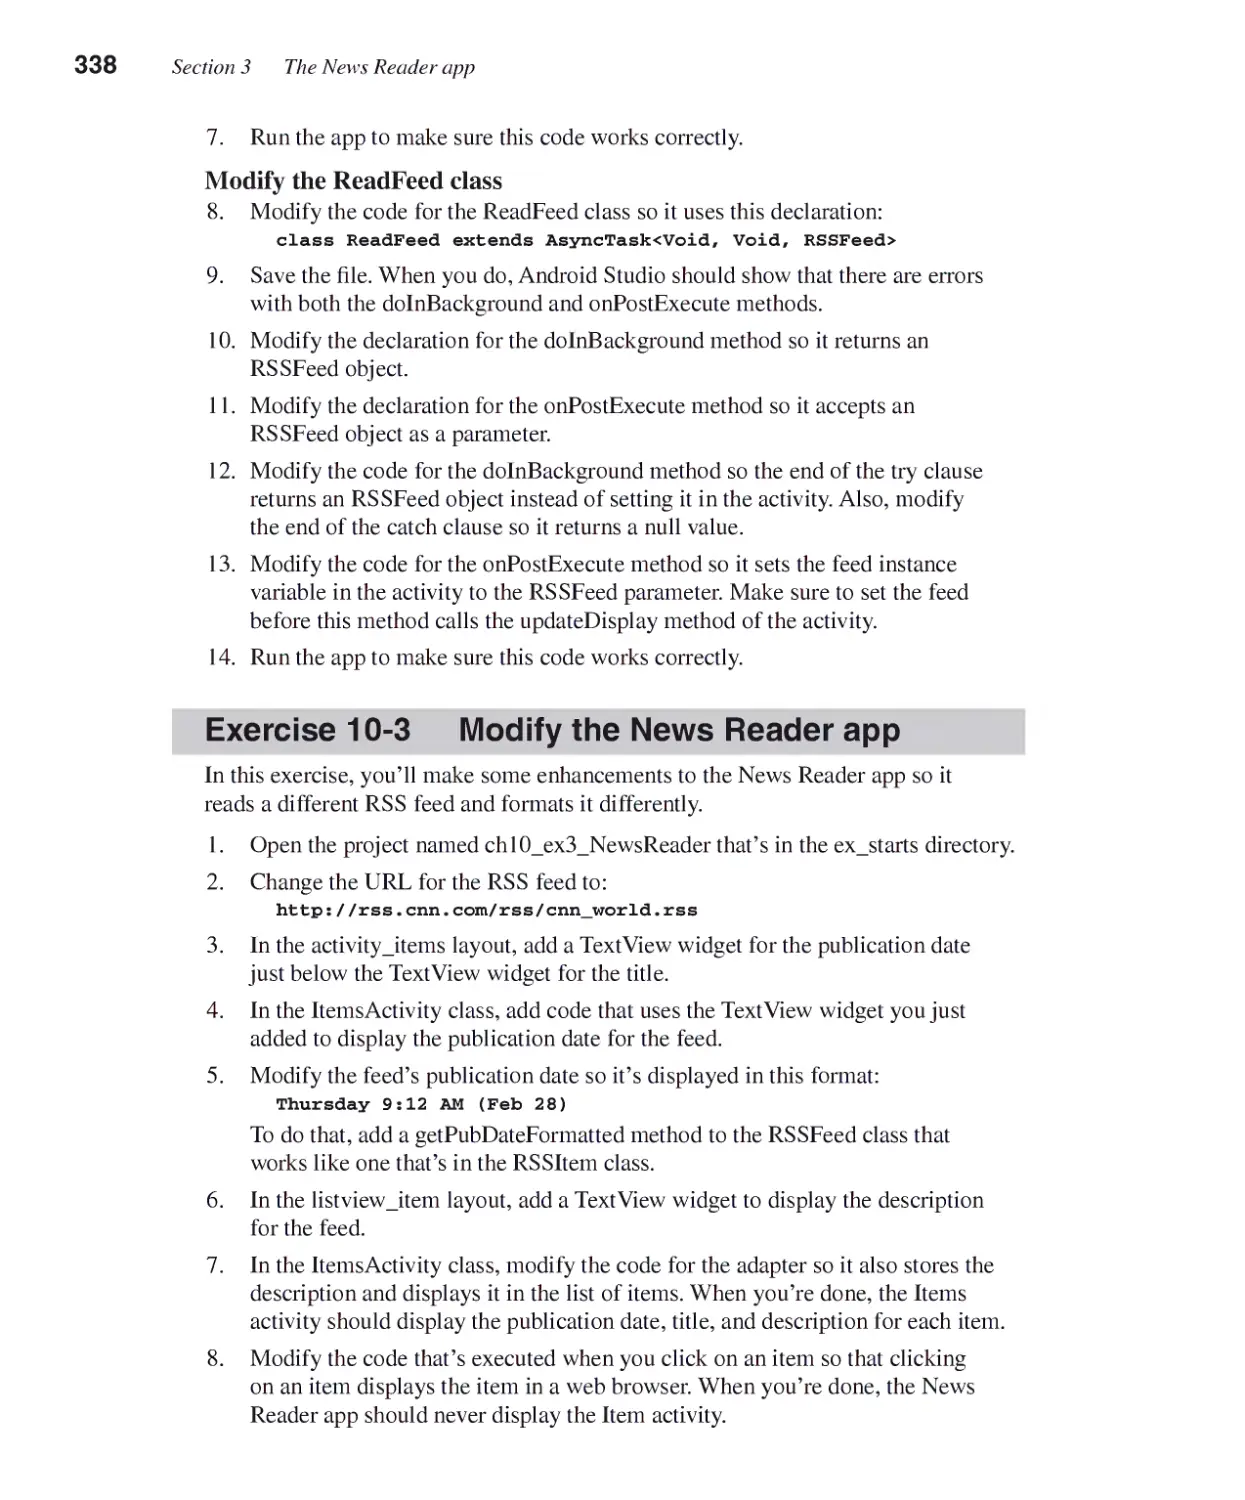 Exercise 10-3 - Modify the News Reader App